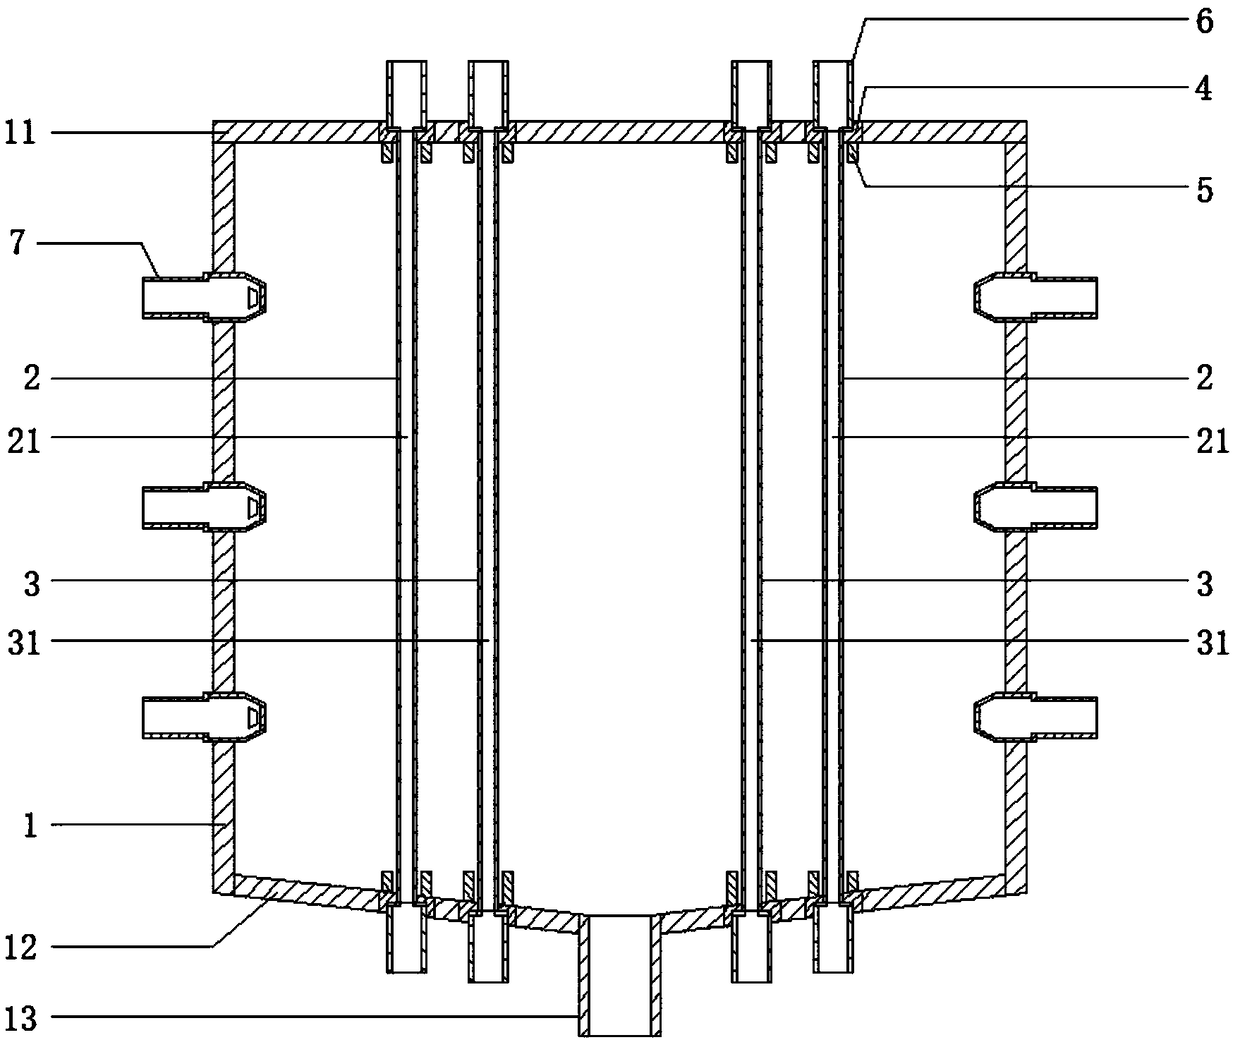 Gas desulfurization method and apparatus